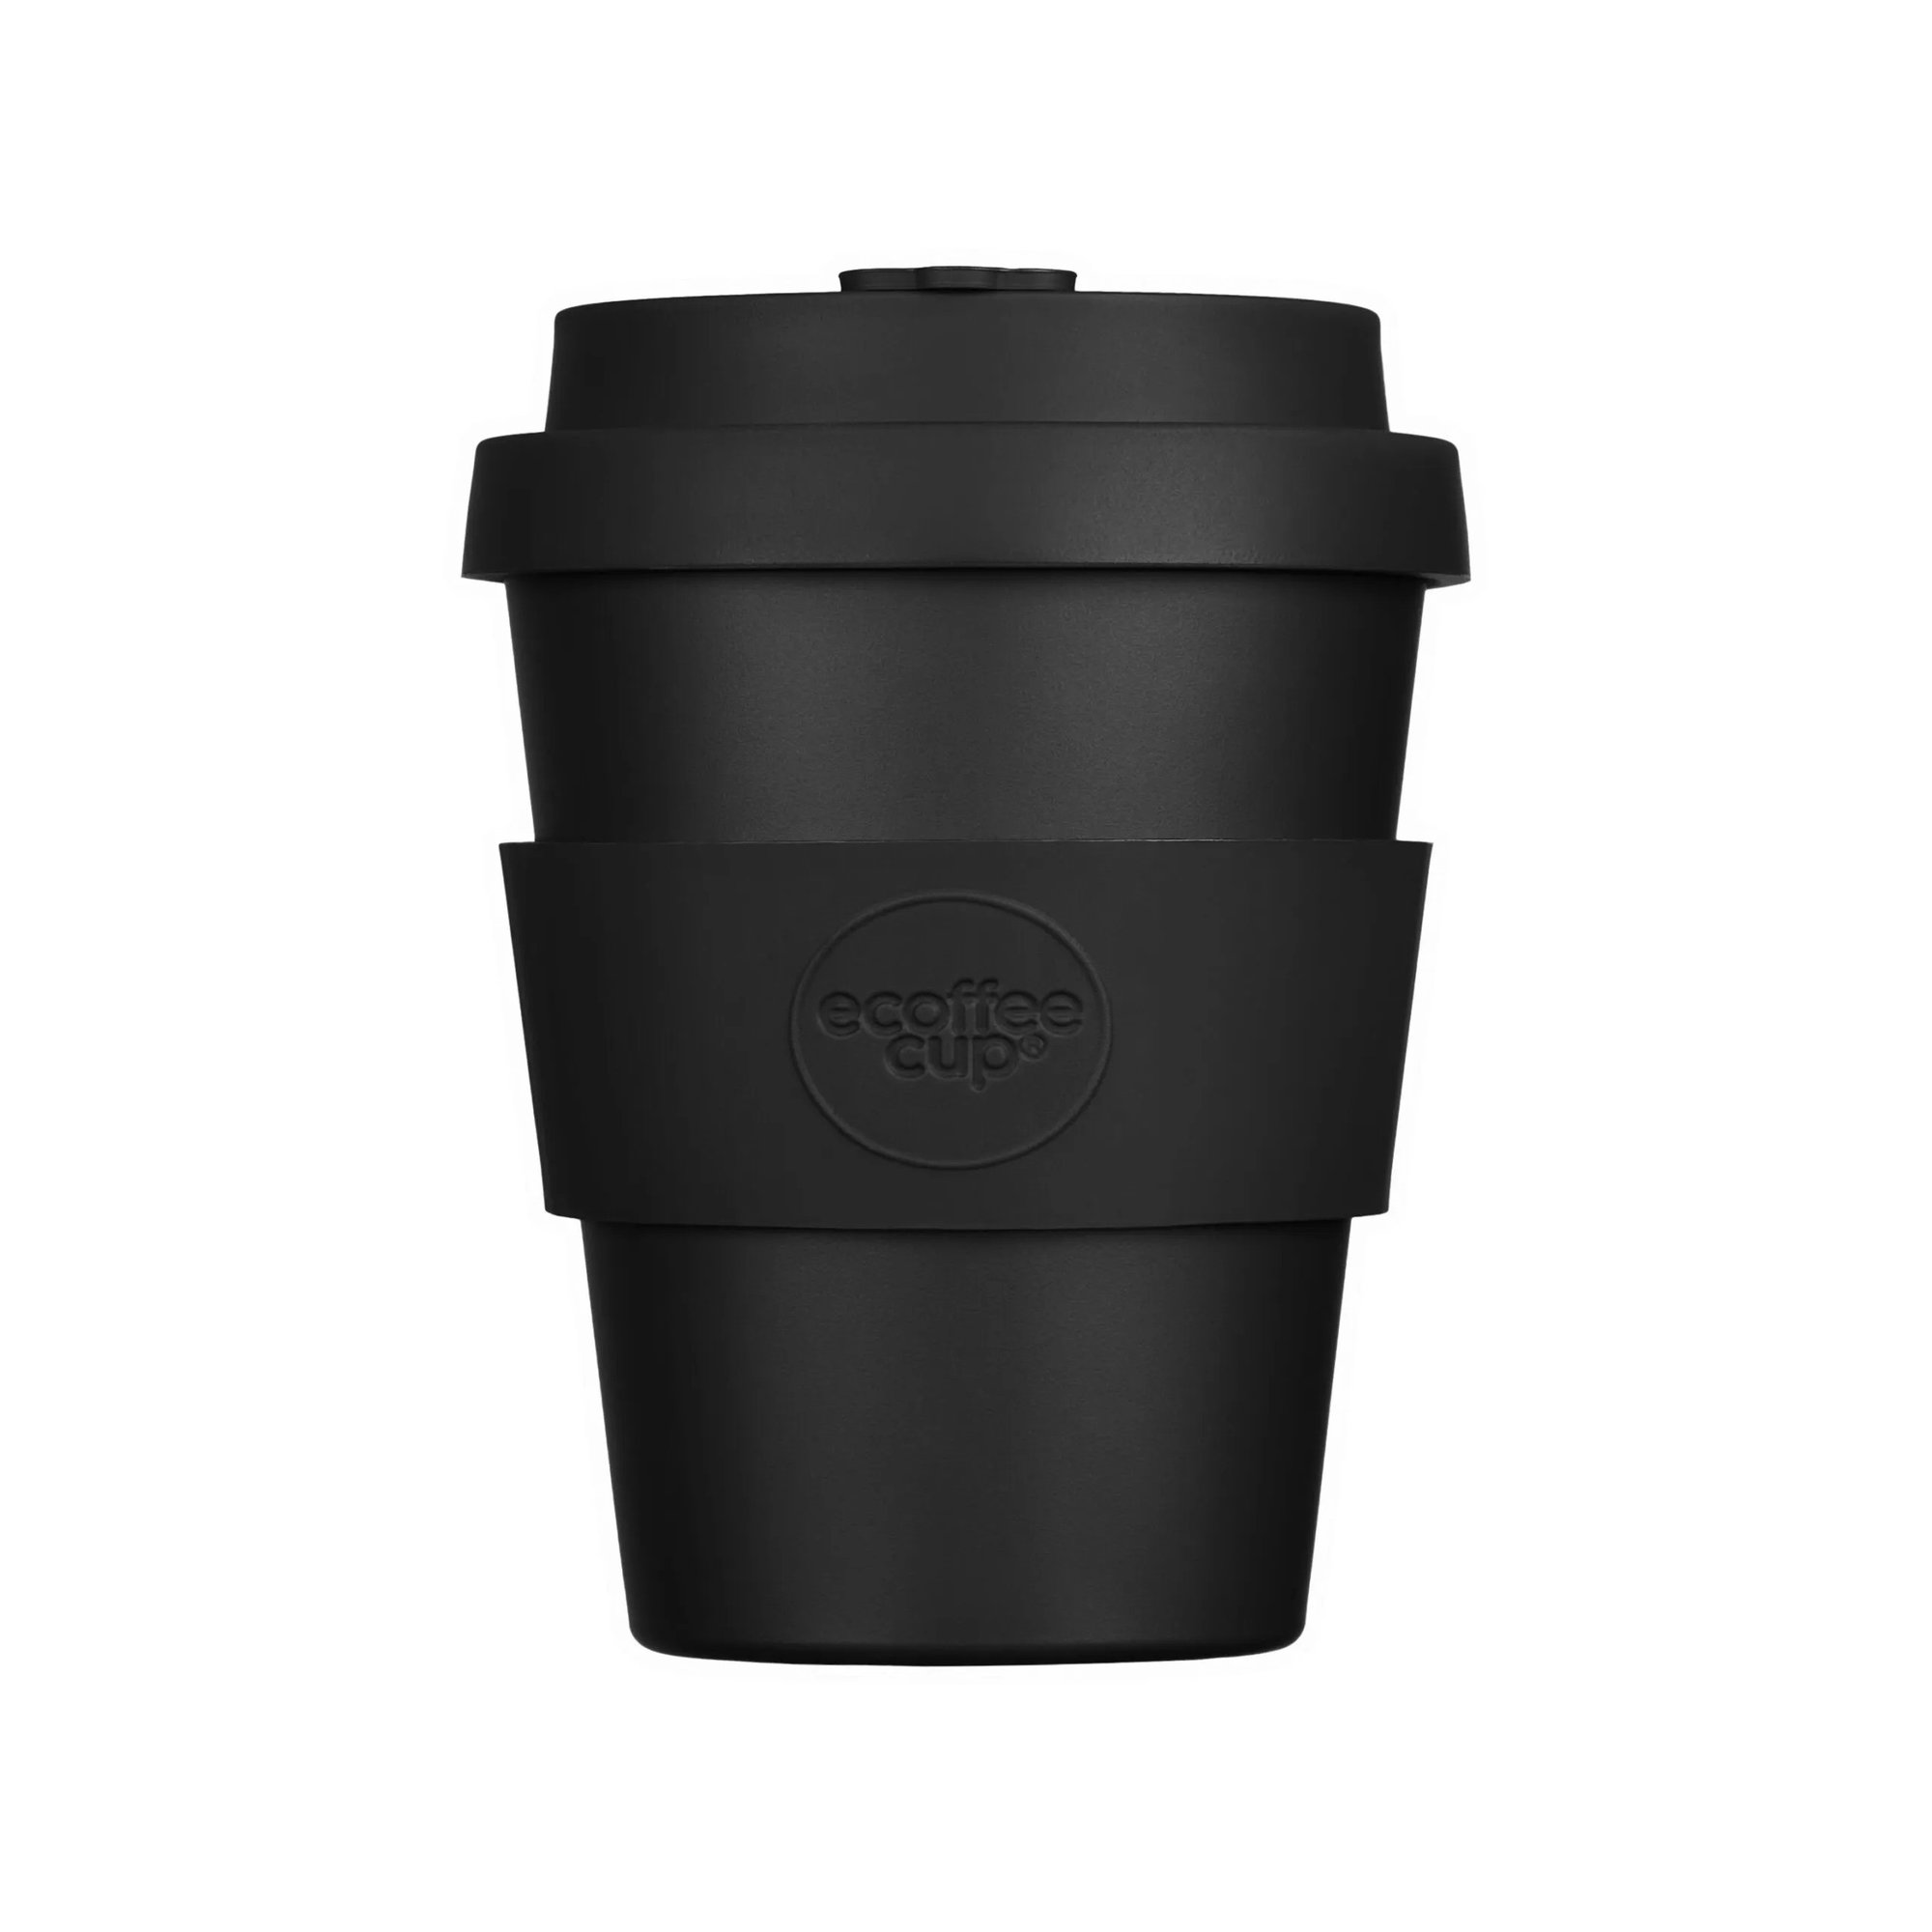 Ecoffee cup - black